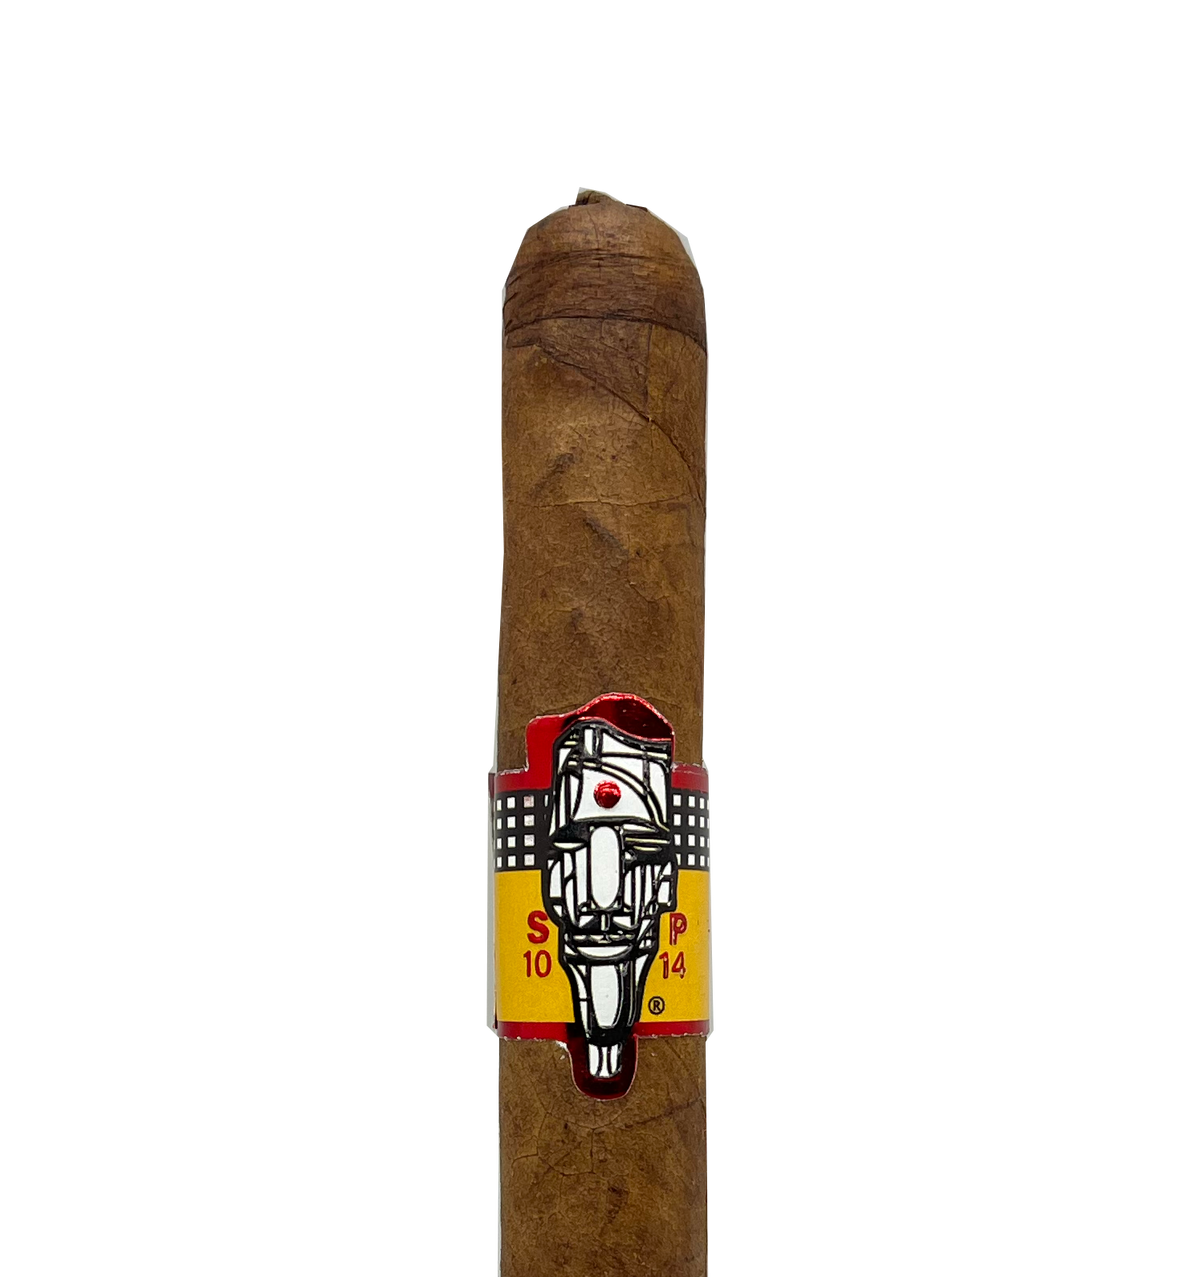 Sanj Patel Cigar